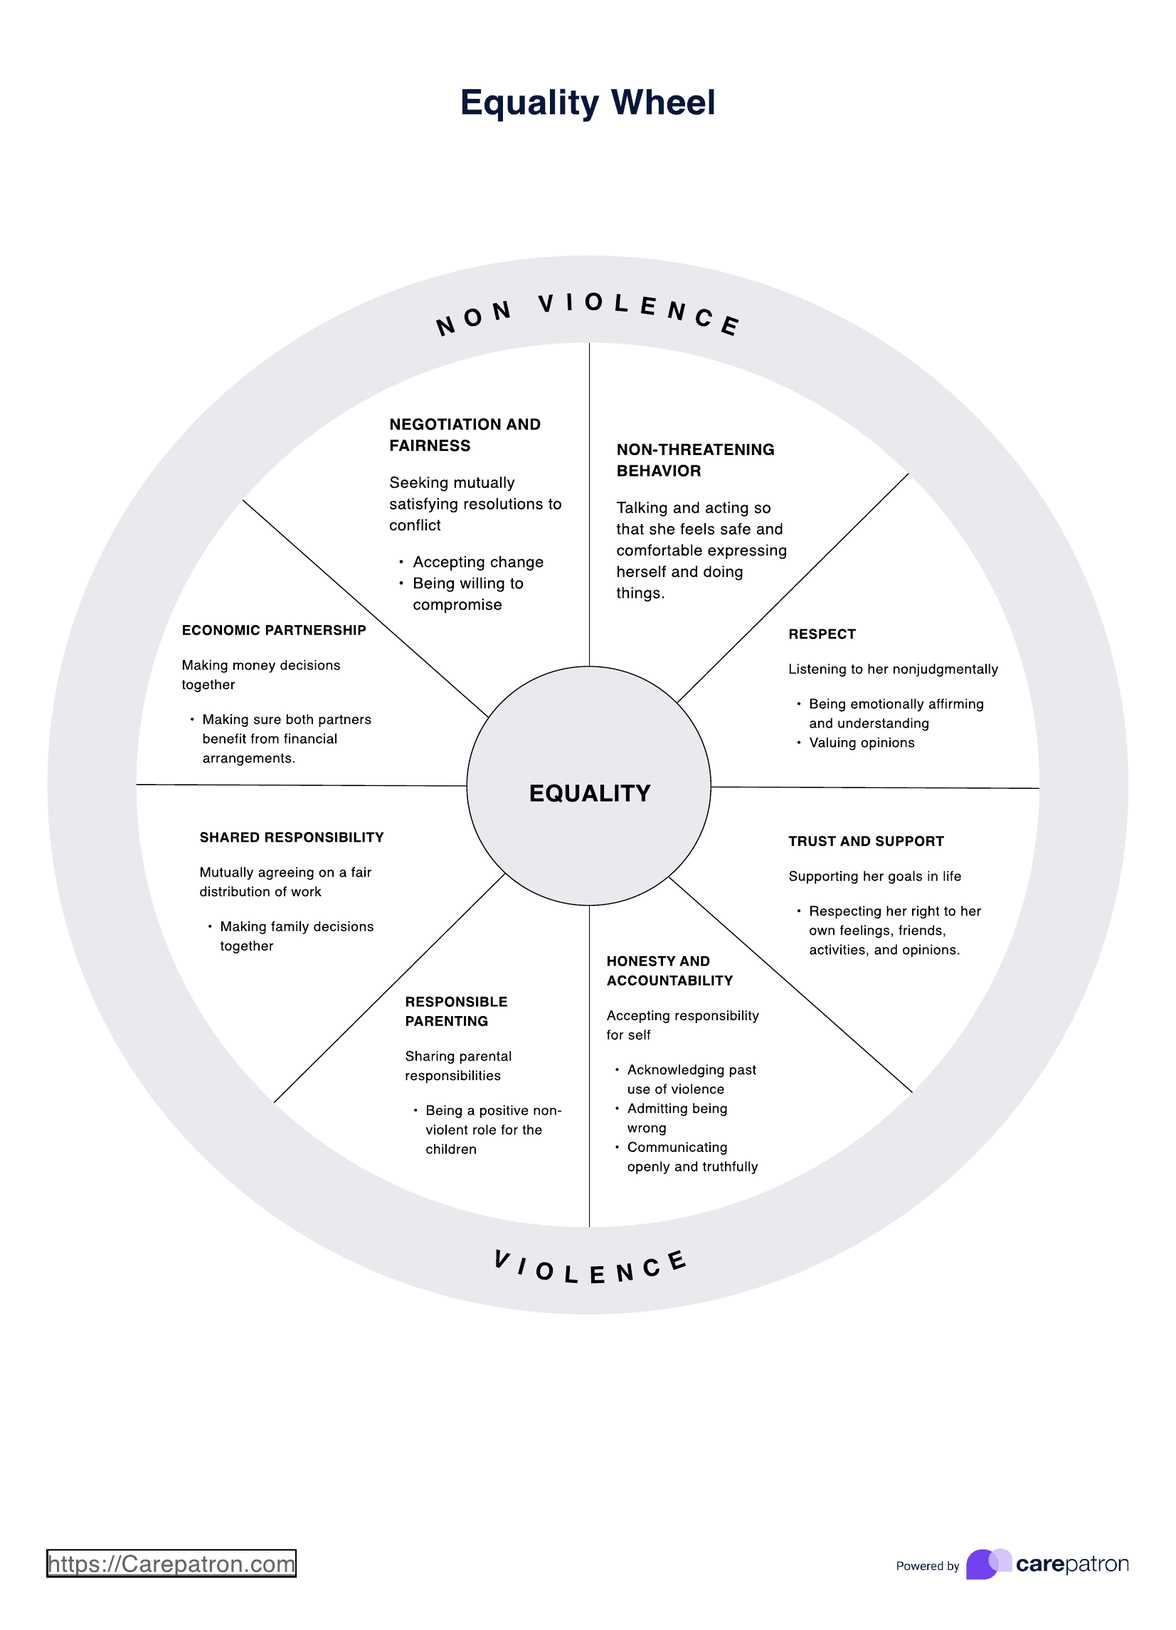 Equality Wheel PDF Example